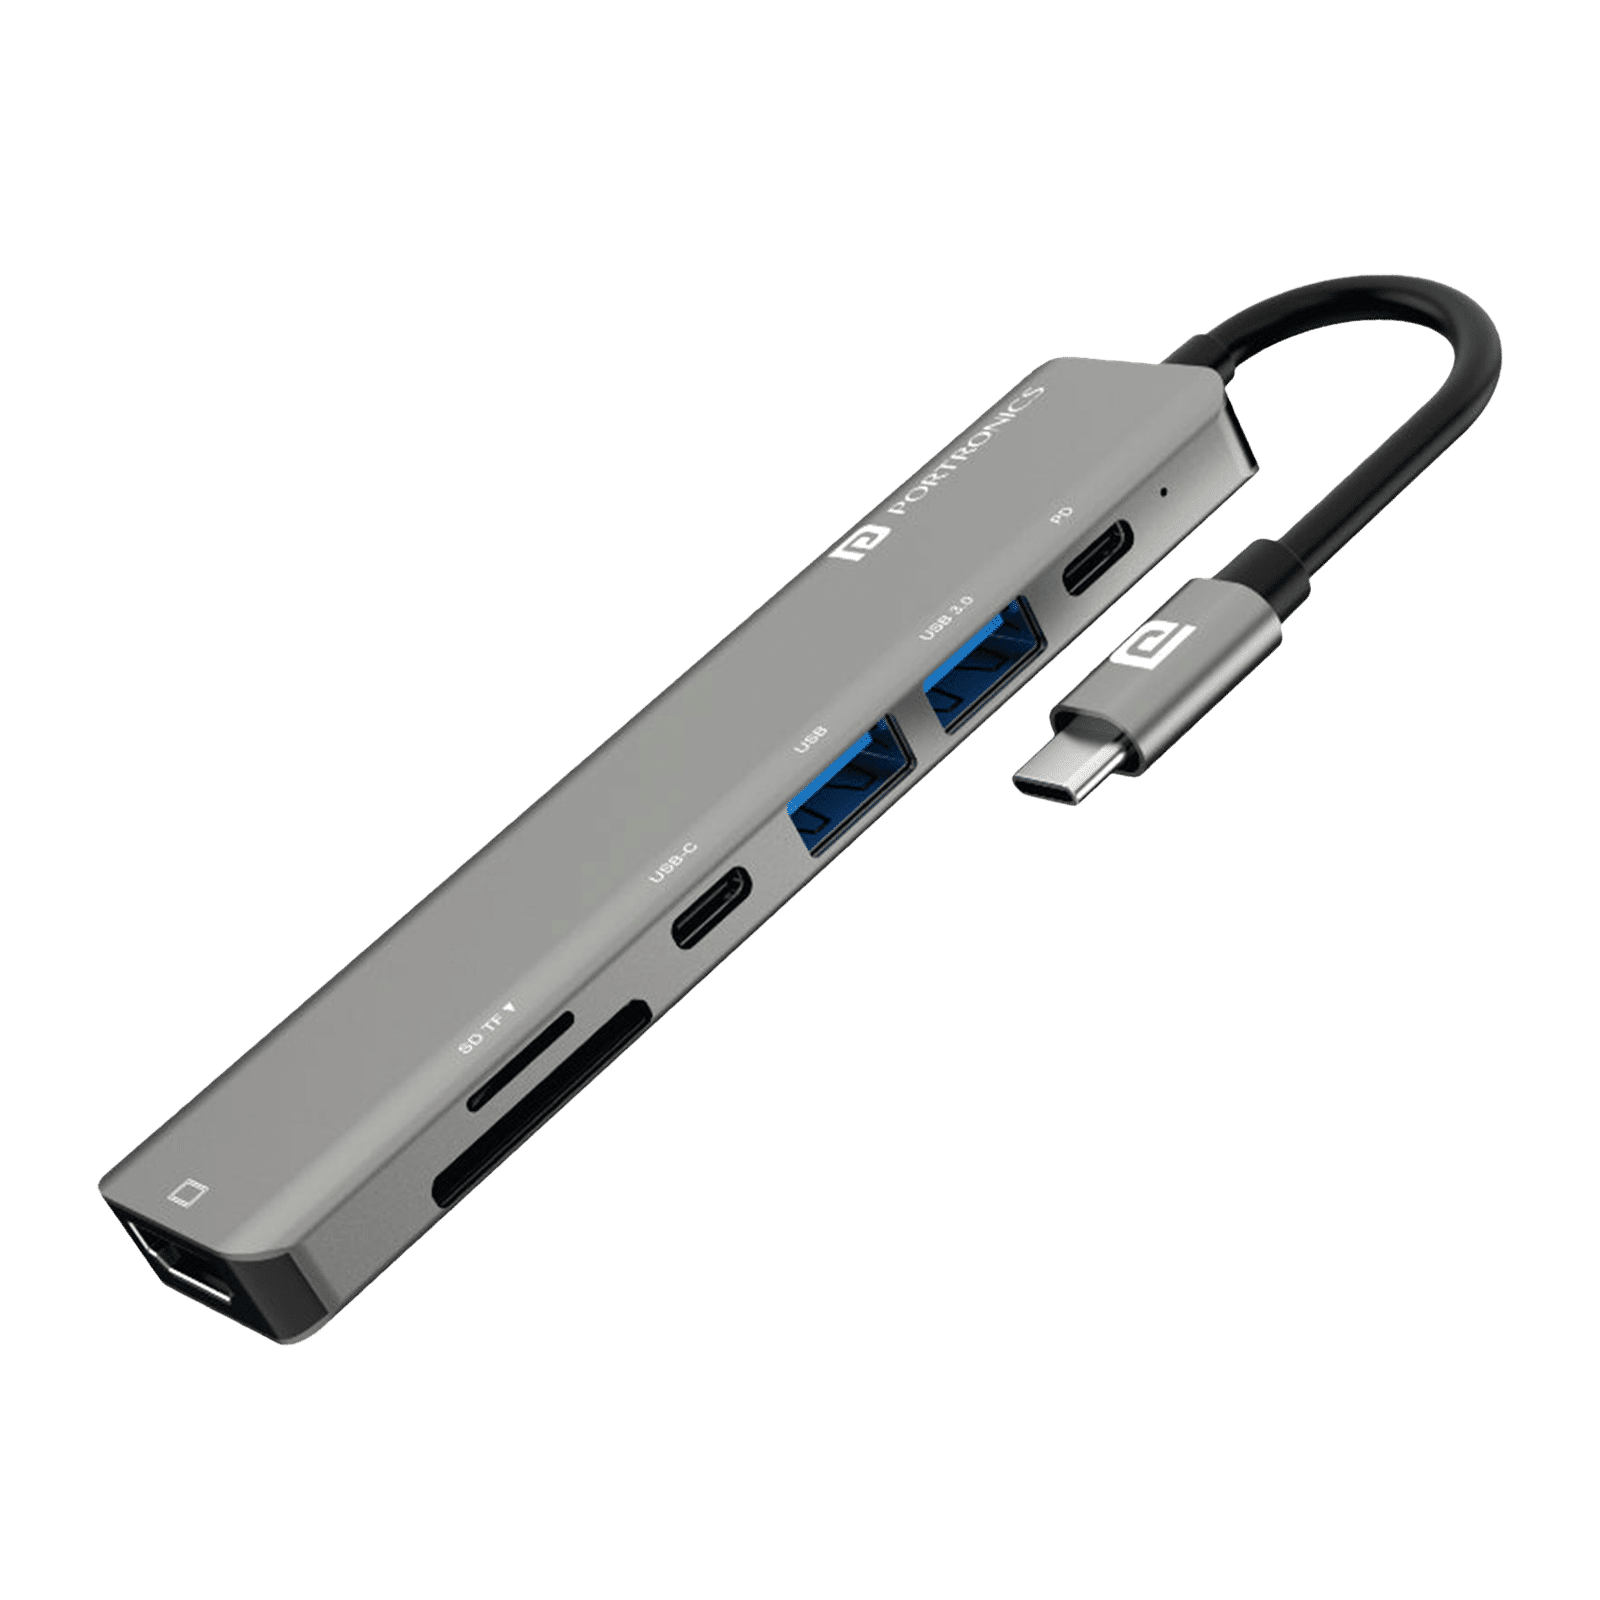 10Gbps 10 in 1 USB-C & USB-A Hub